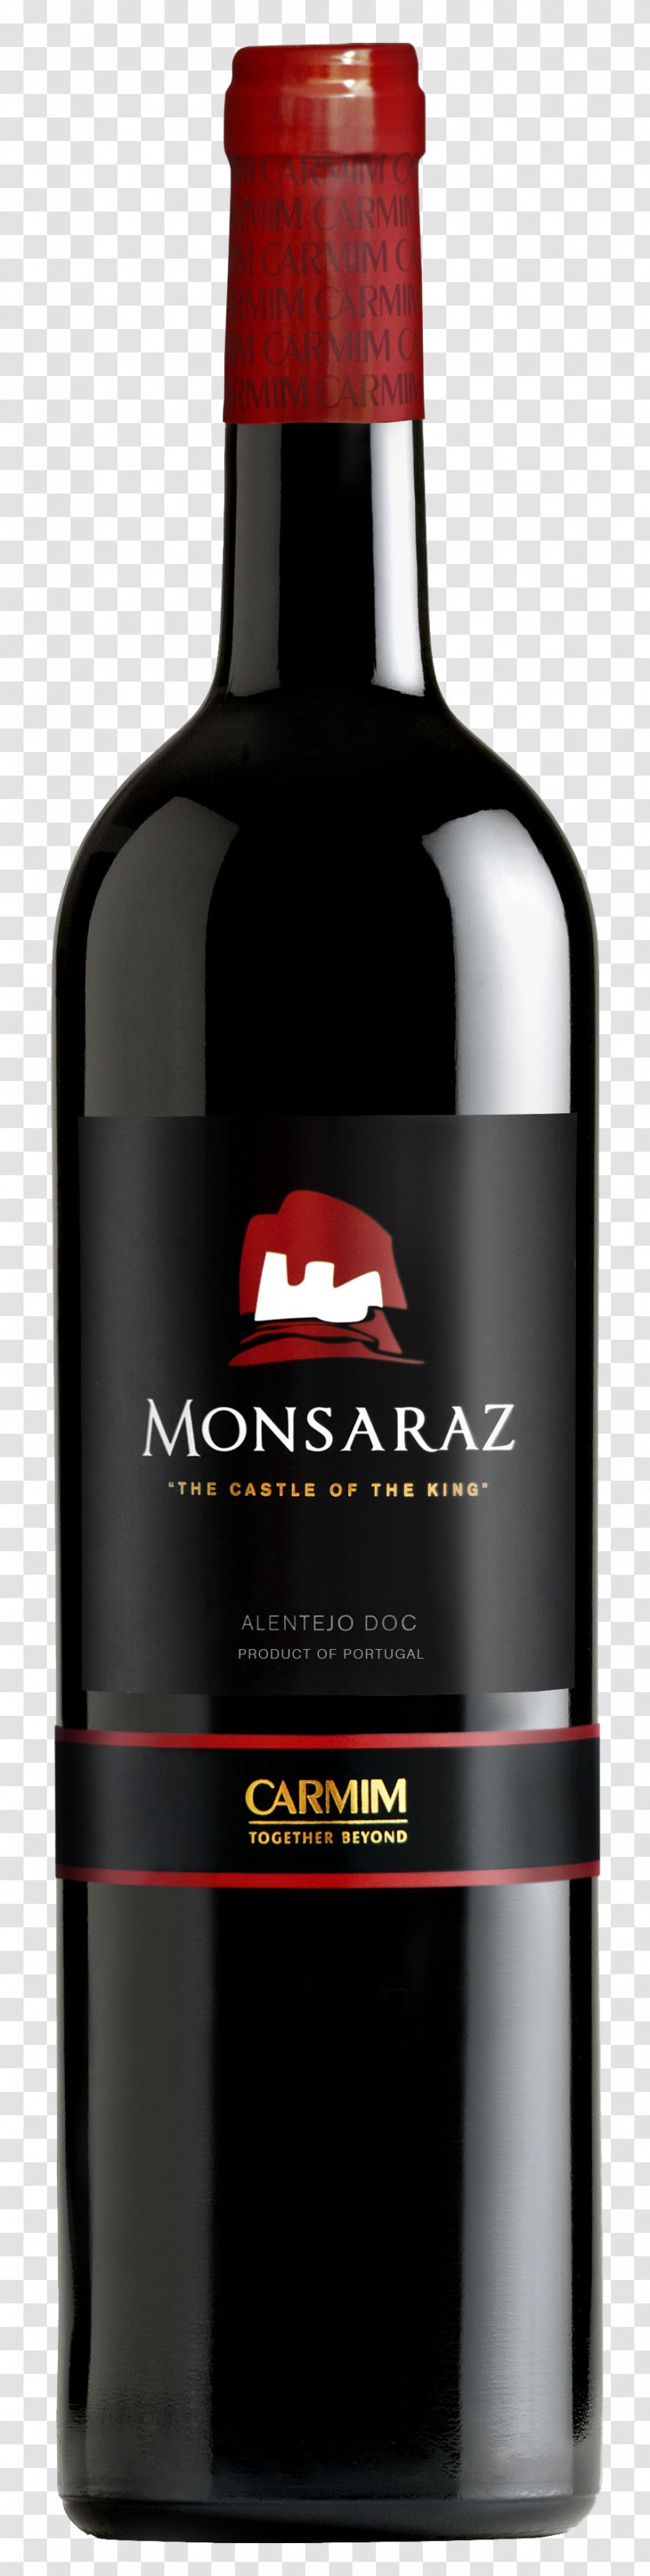 Monsaraz Portuguese Wine Red Alentejo - NUTSIIWine Transparent PNG